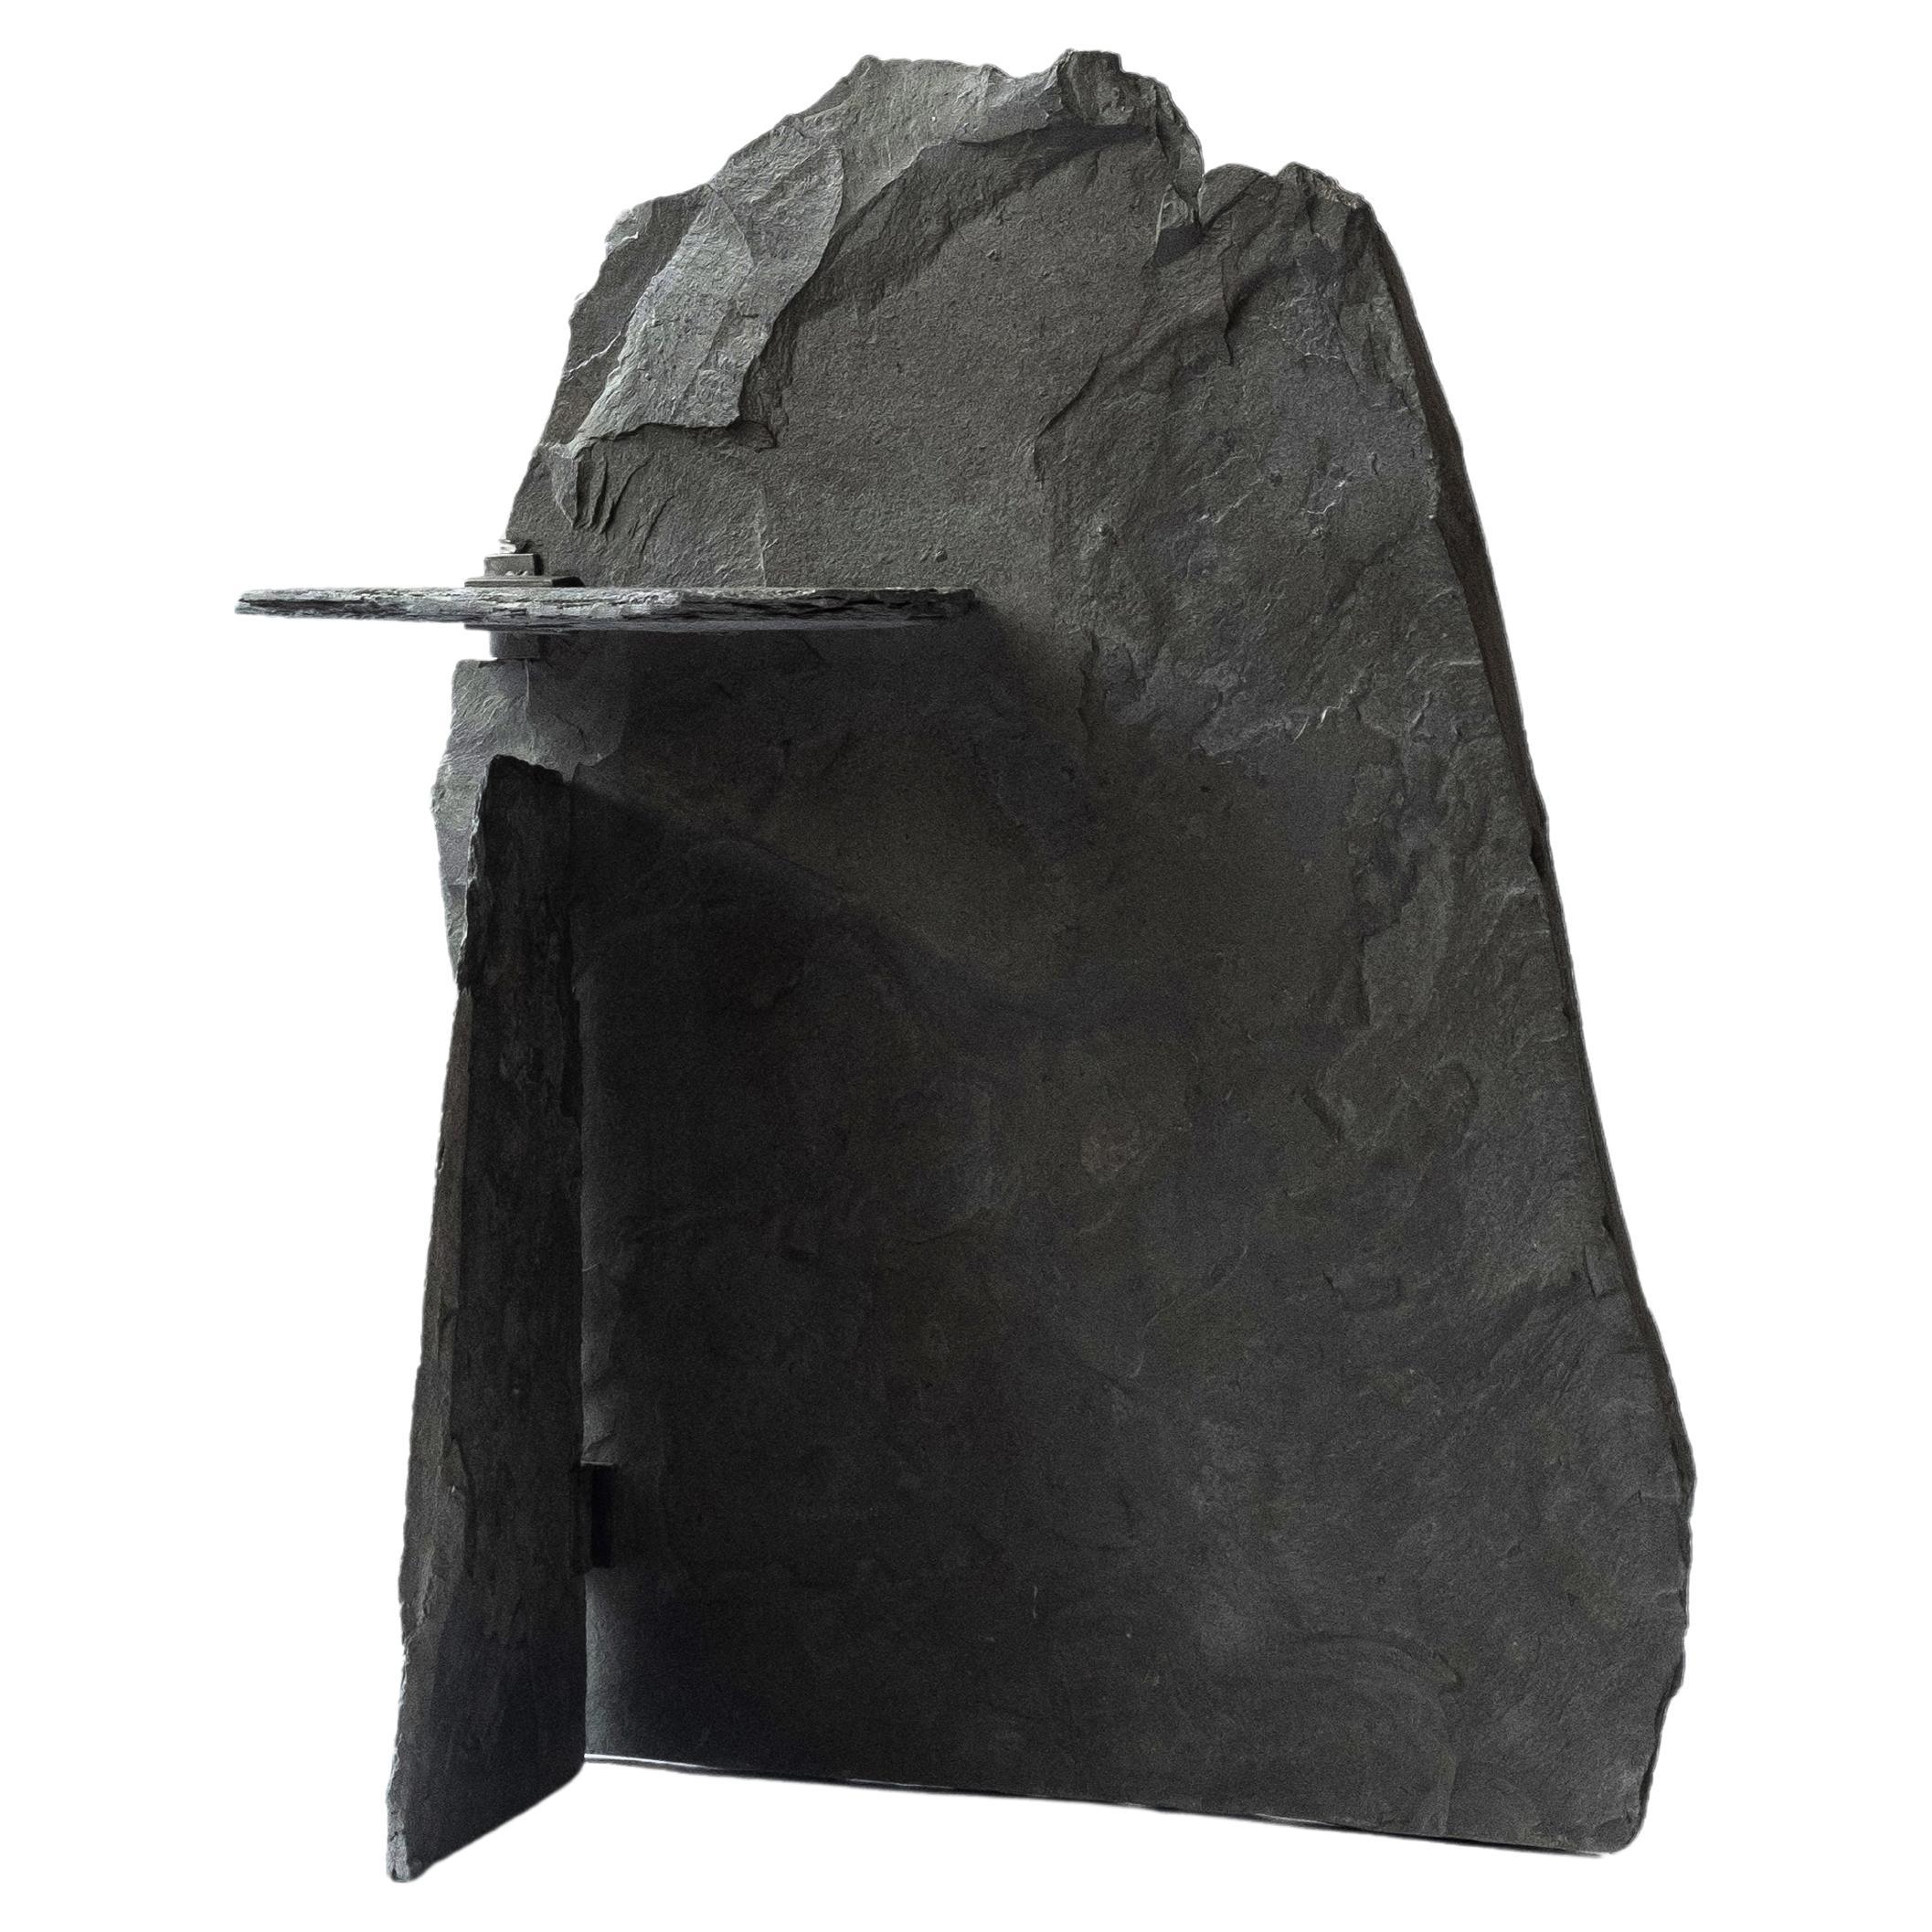 Contemporary Objects for Objects for Stone en pierre d'ardoise et métal